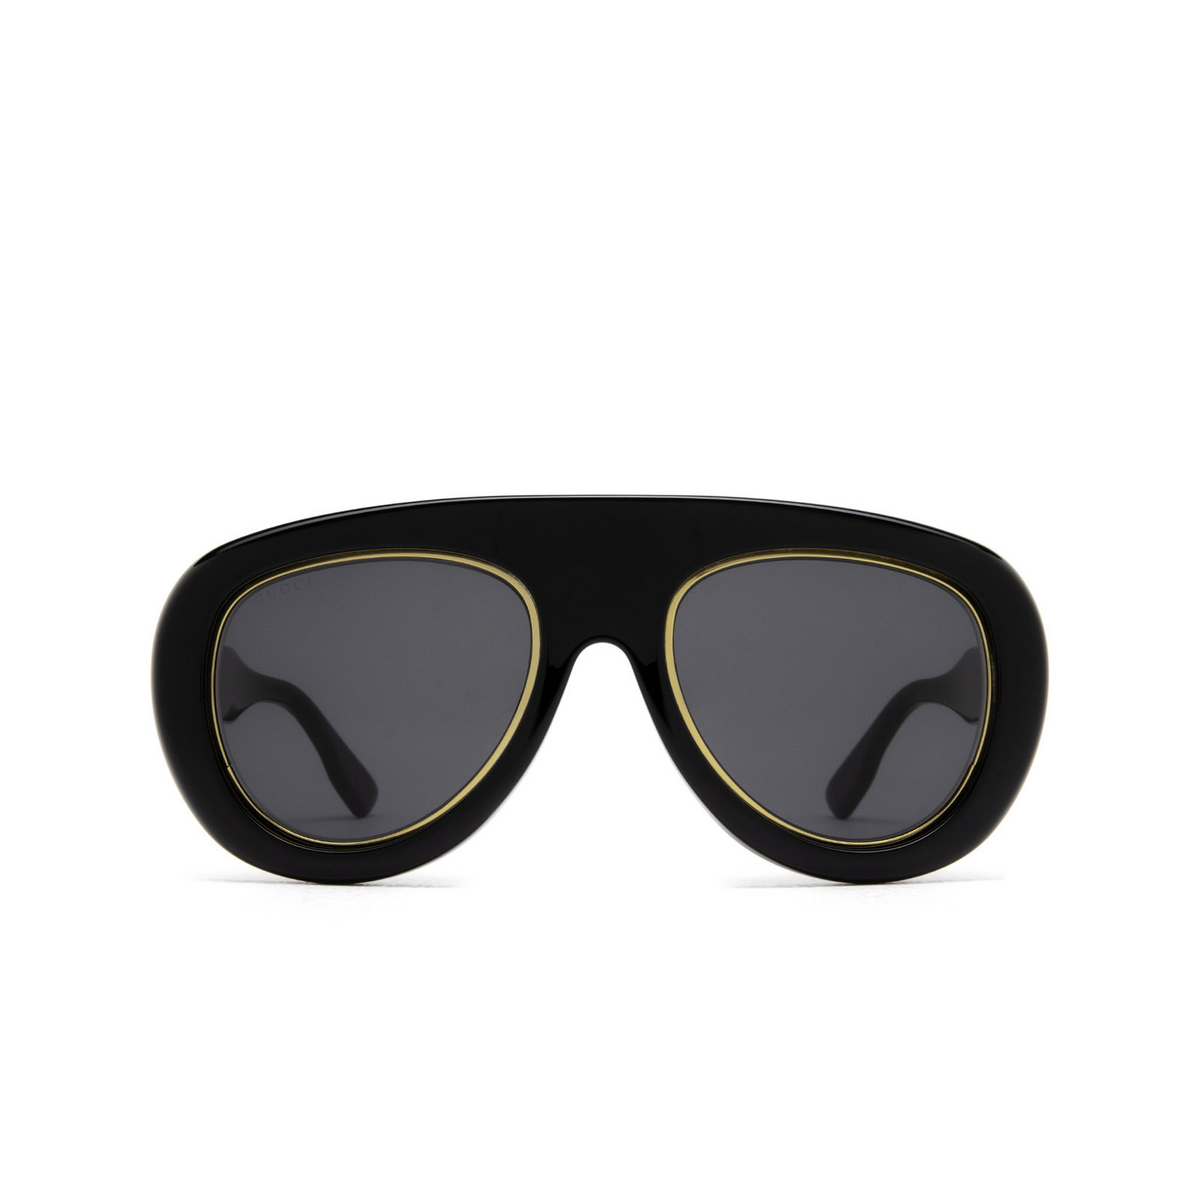 Gucci® Aviator Sunglasses: GG1152S color Black 001 - front view.